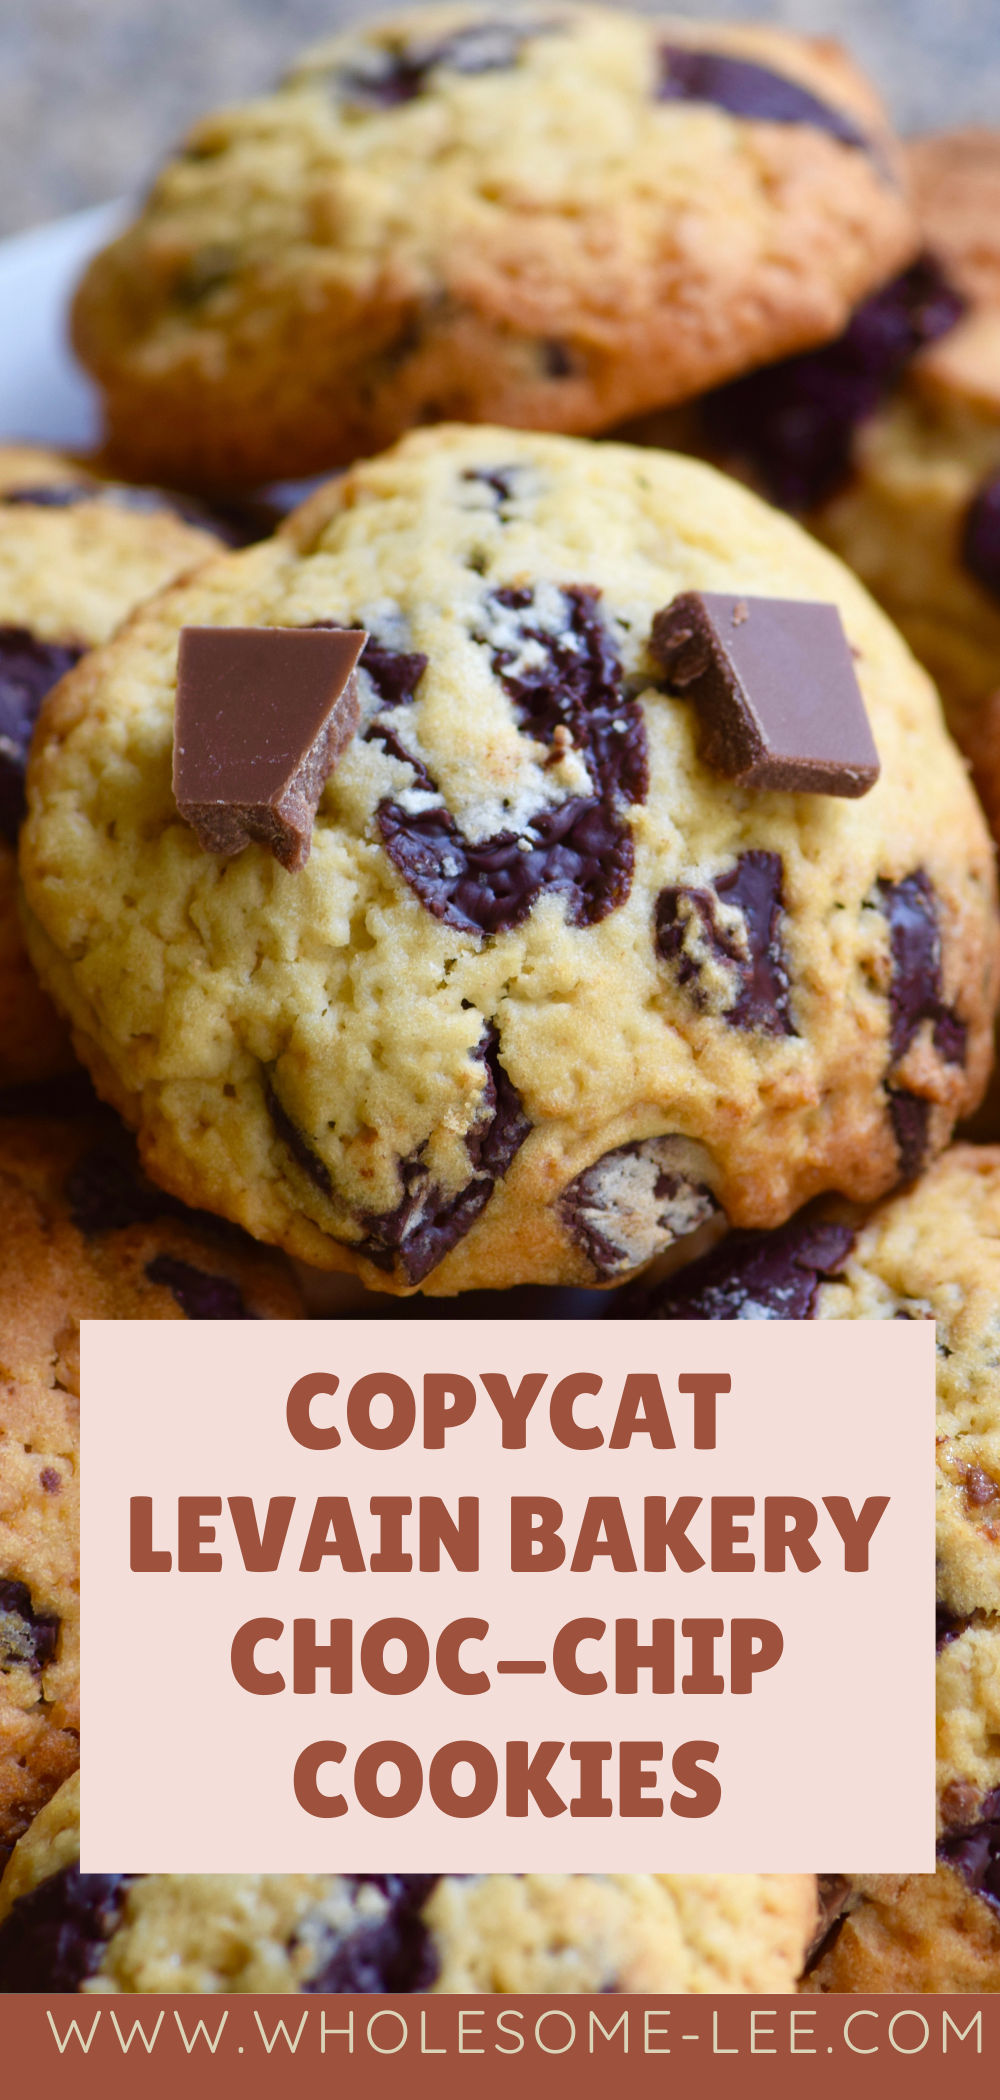 Copycat levian bakery choc-chip cookies